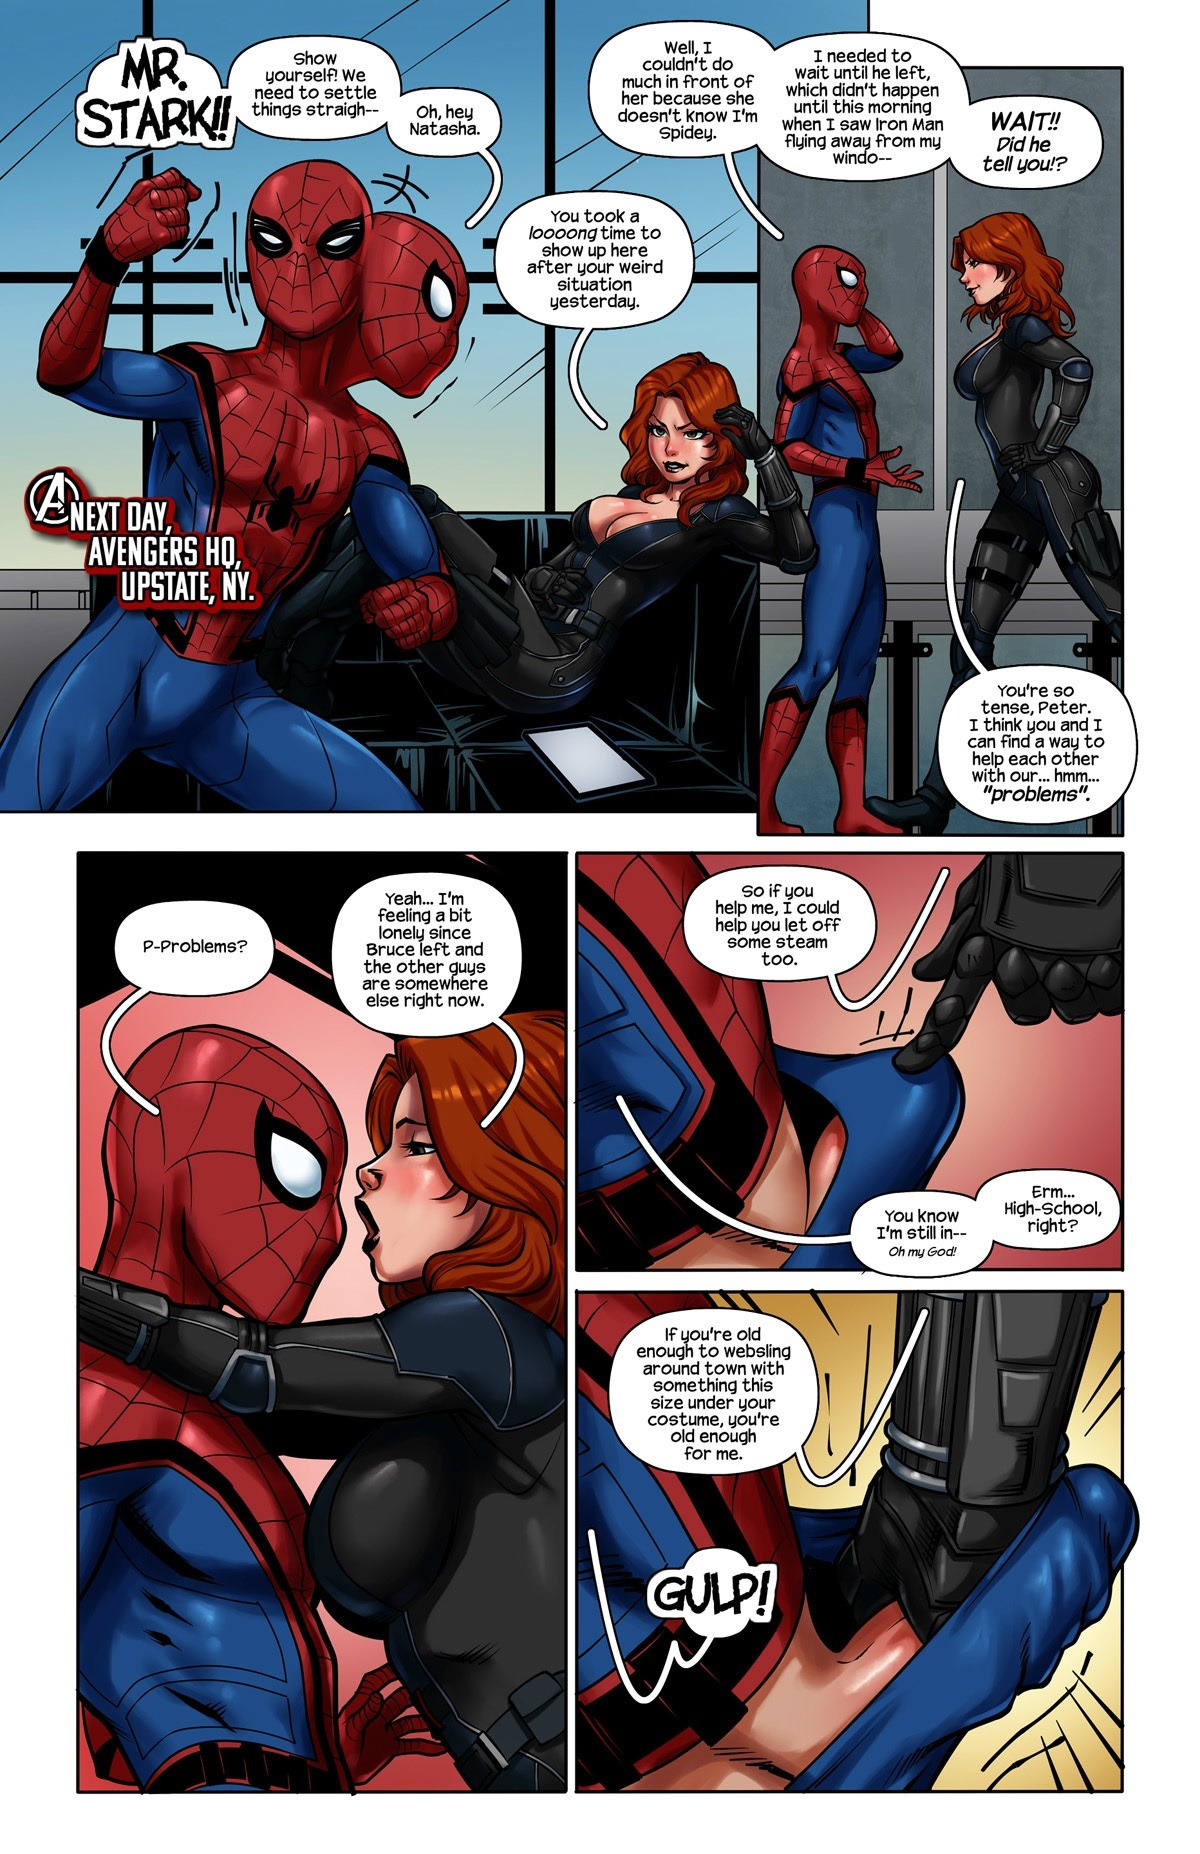 Black Widow Iron Man Cartoon Porn - Spiderman - Civil war - Multporn Comics & Hentai manga